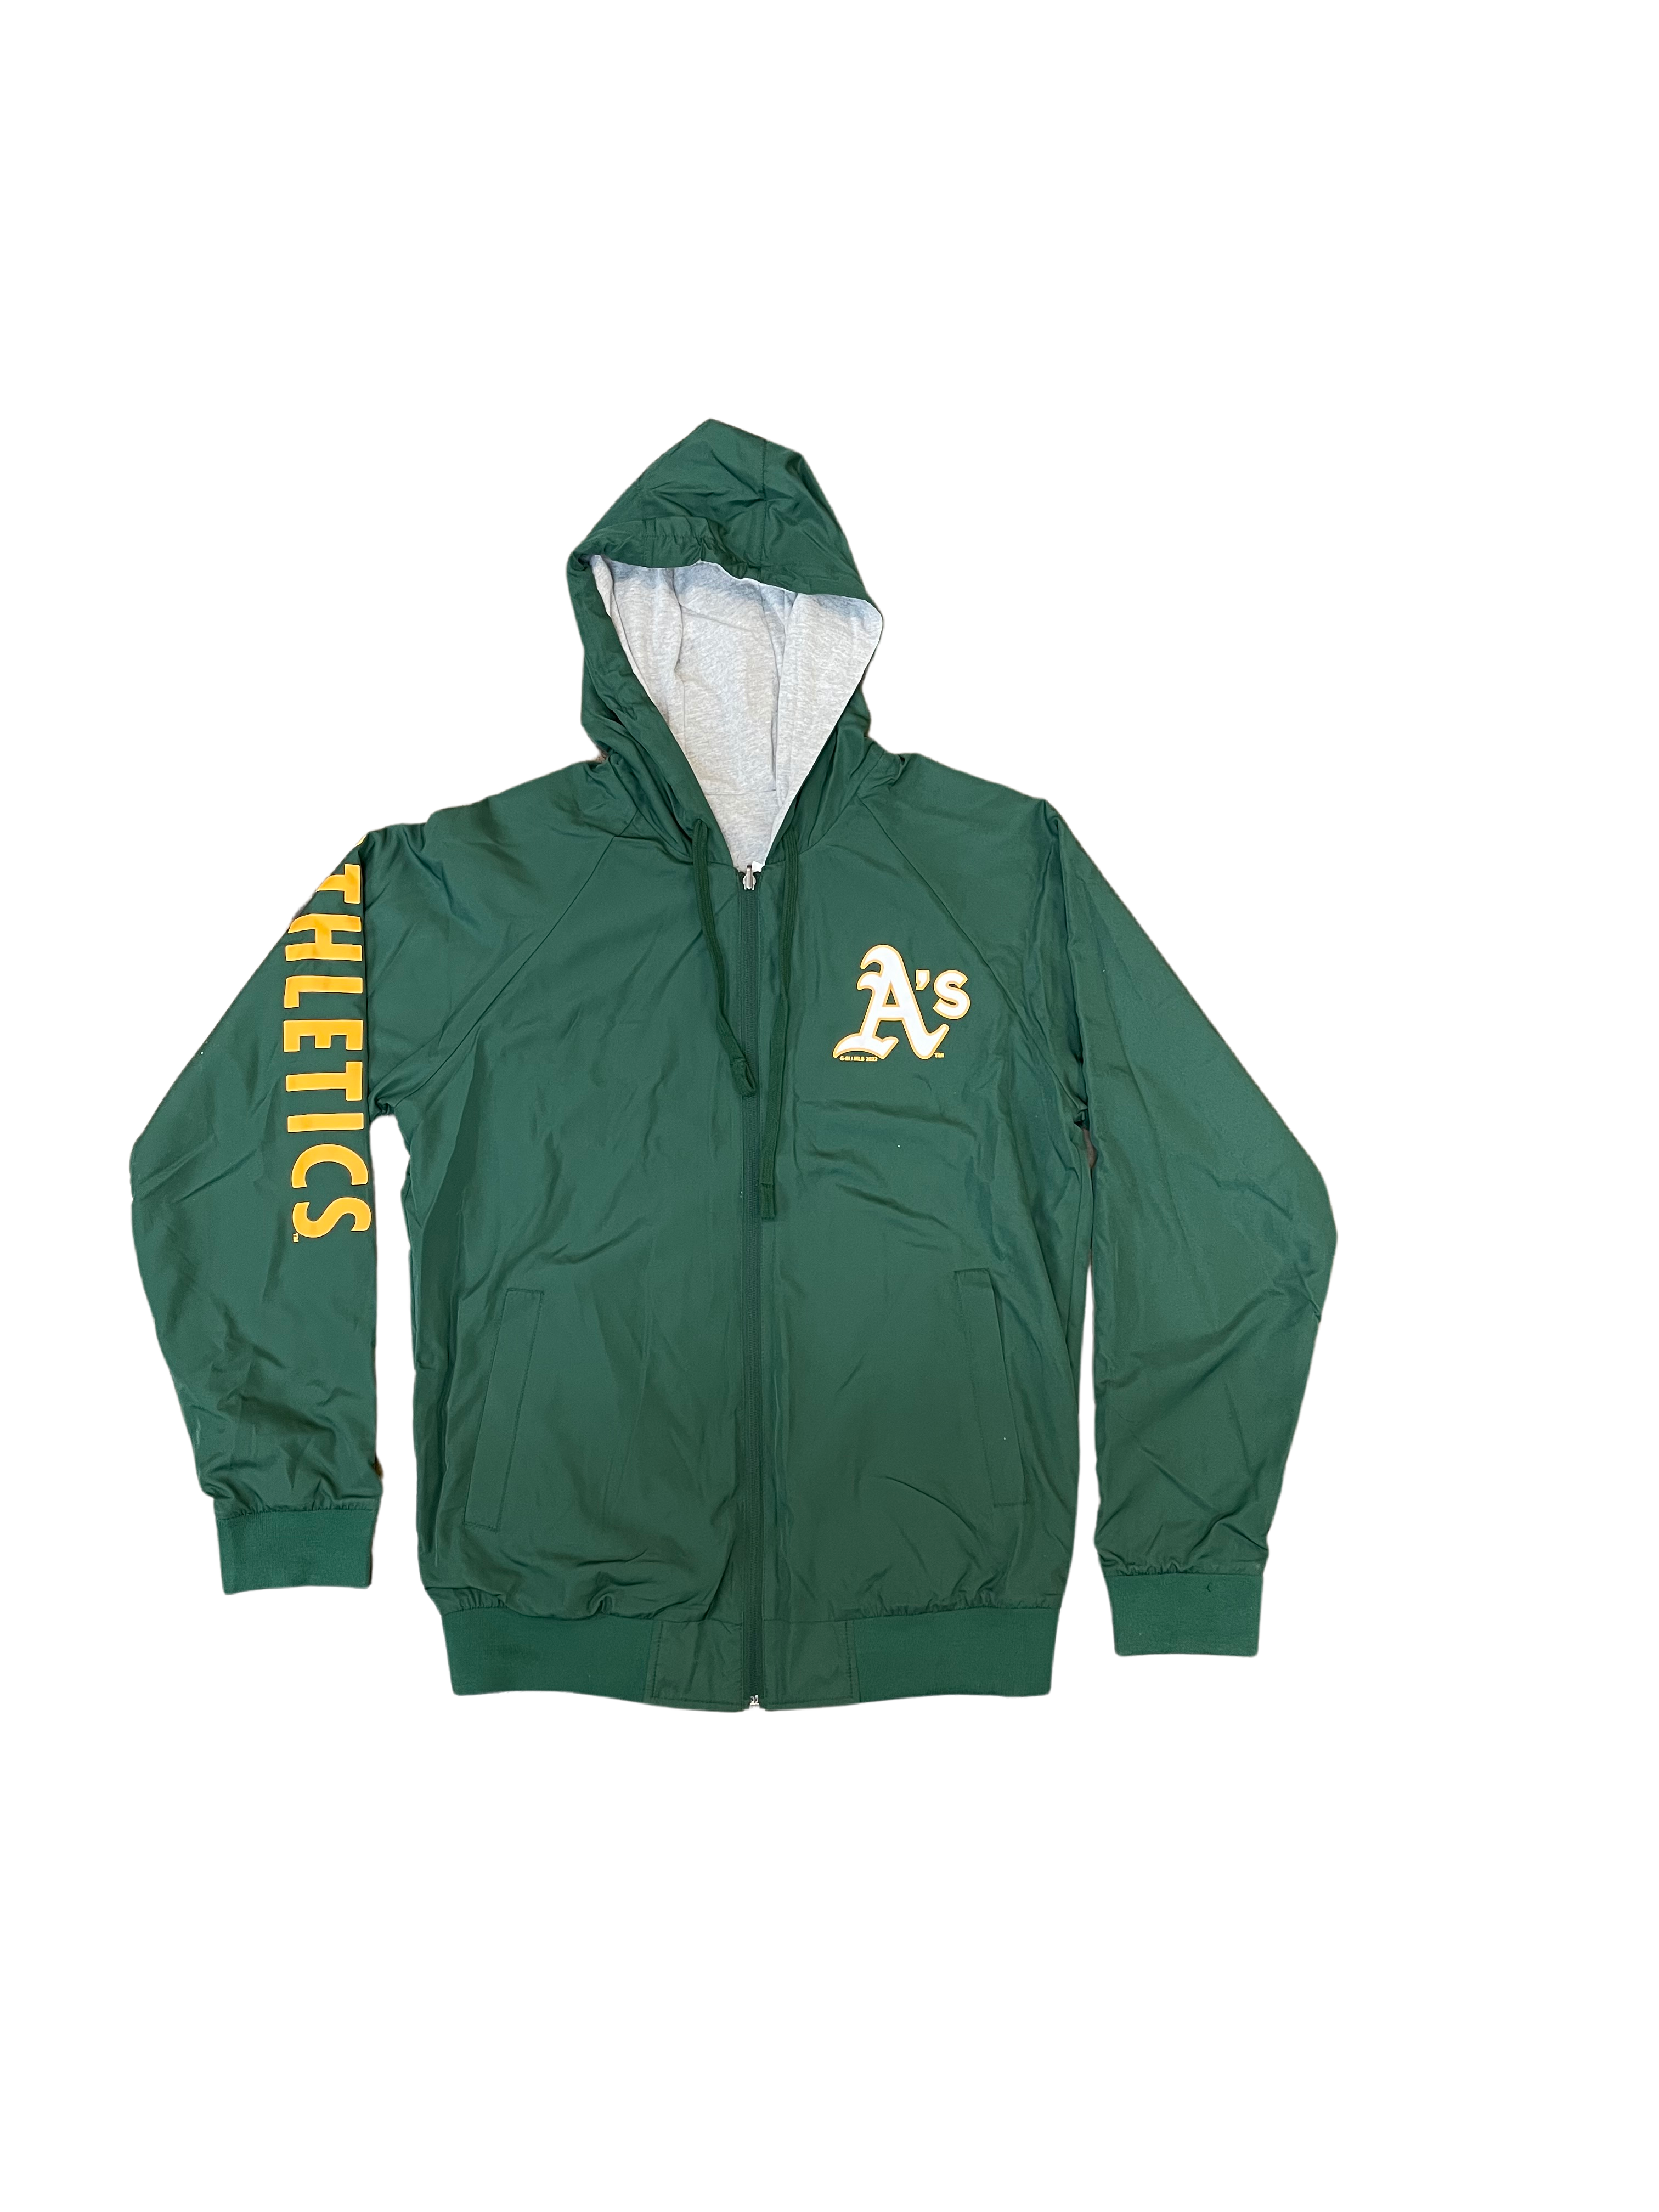 GIII Oakland Athletics Wild Pitch Full Zip Reversible Jacket